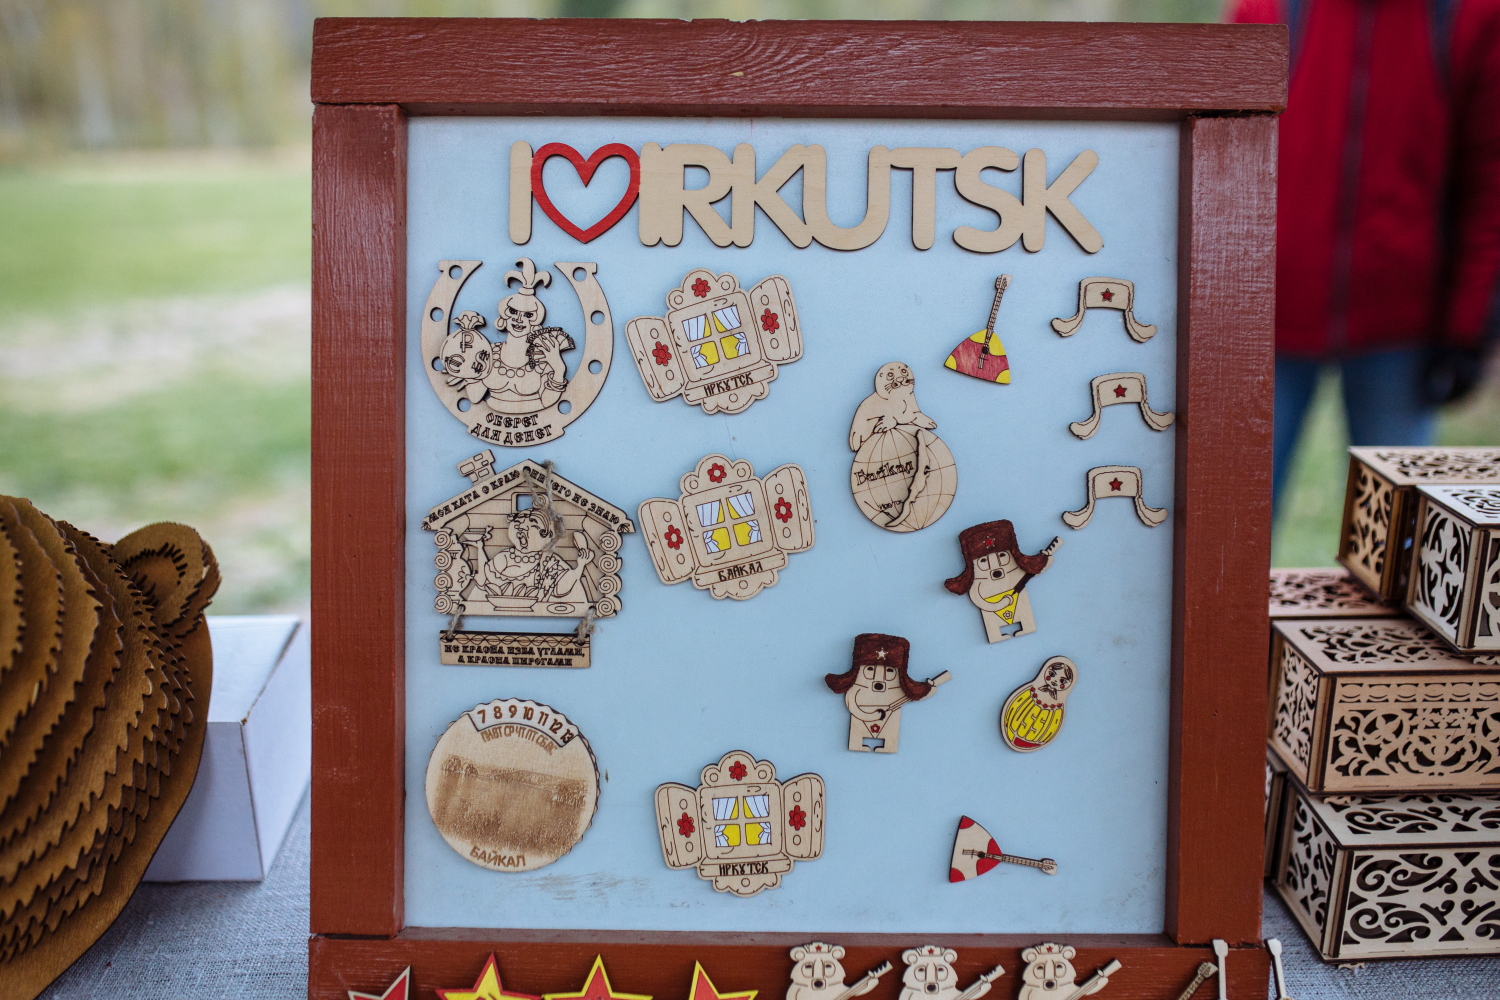 Irkutsk handmade souvenir magnets